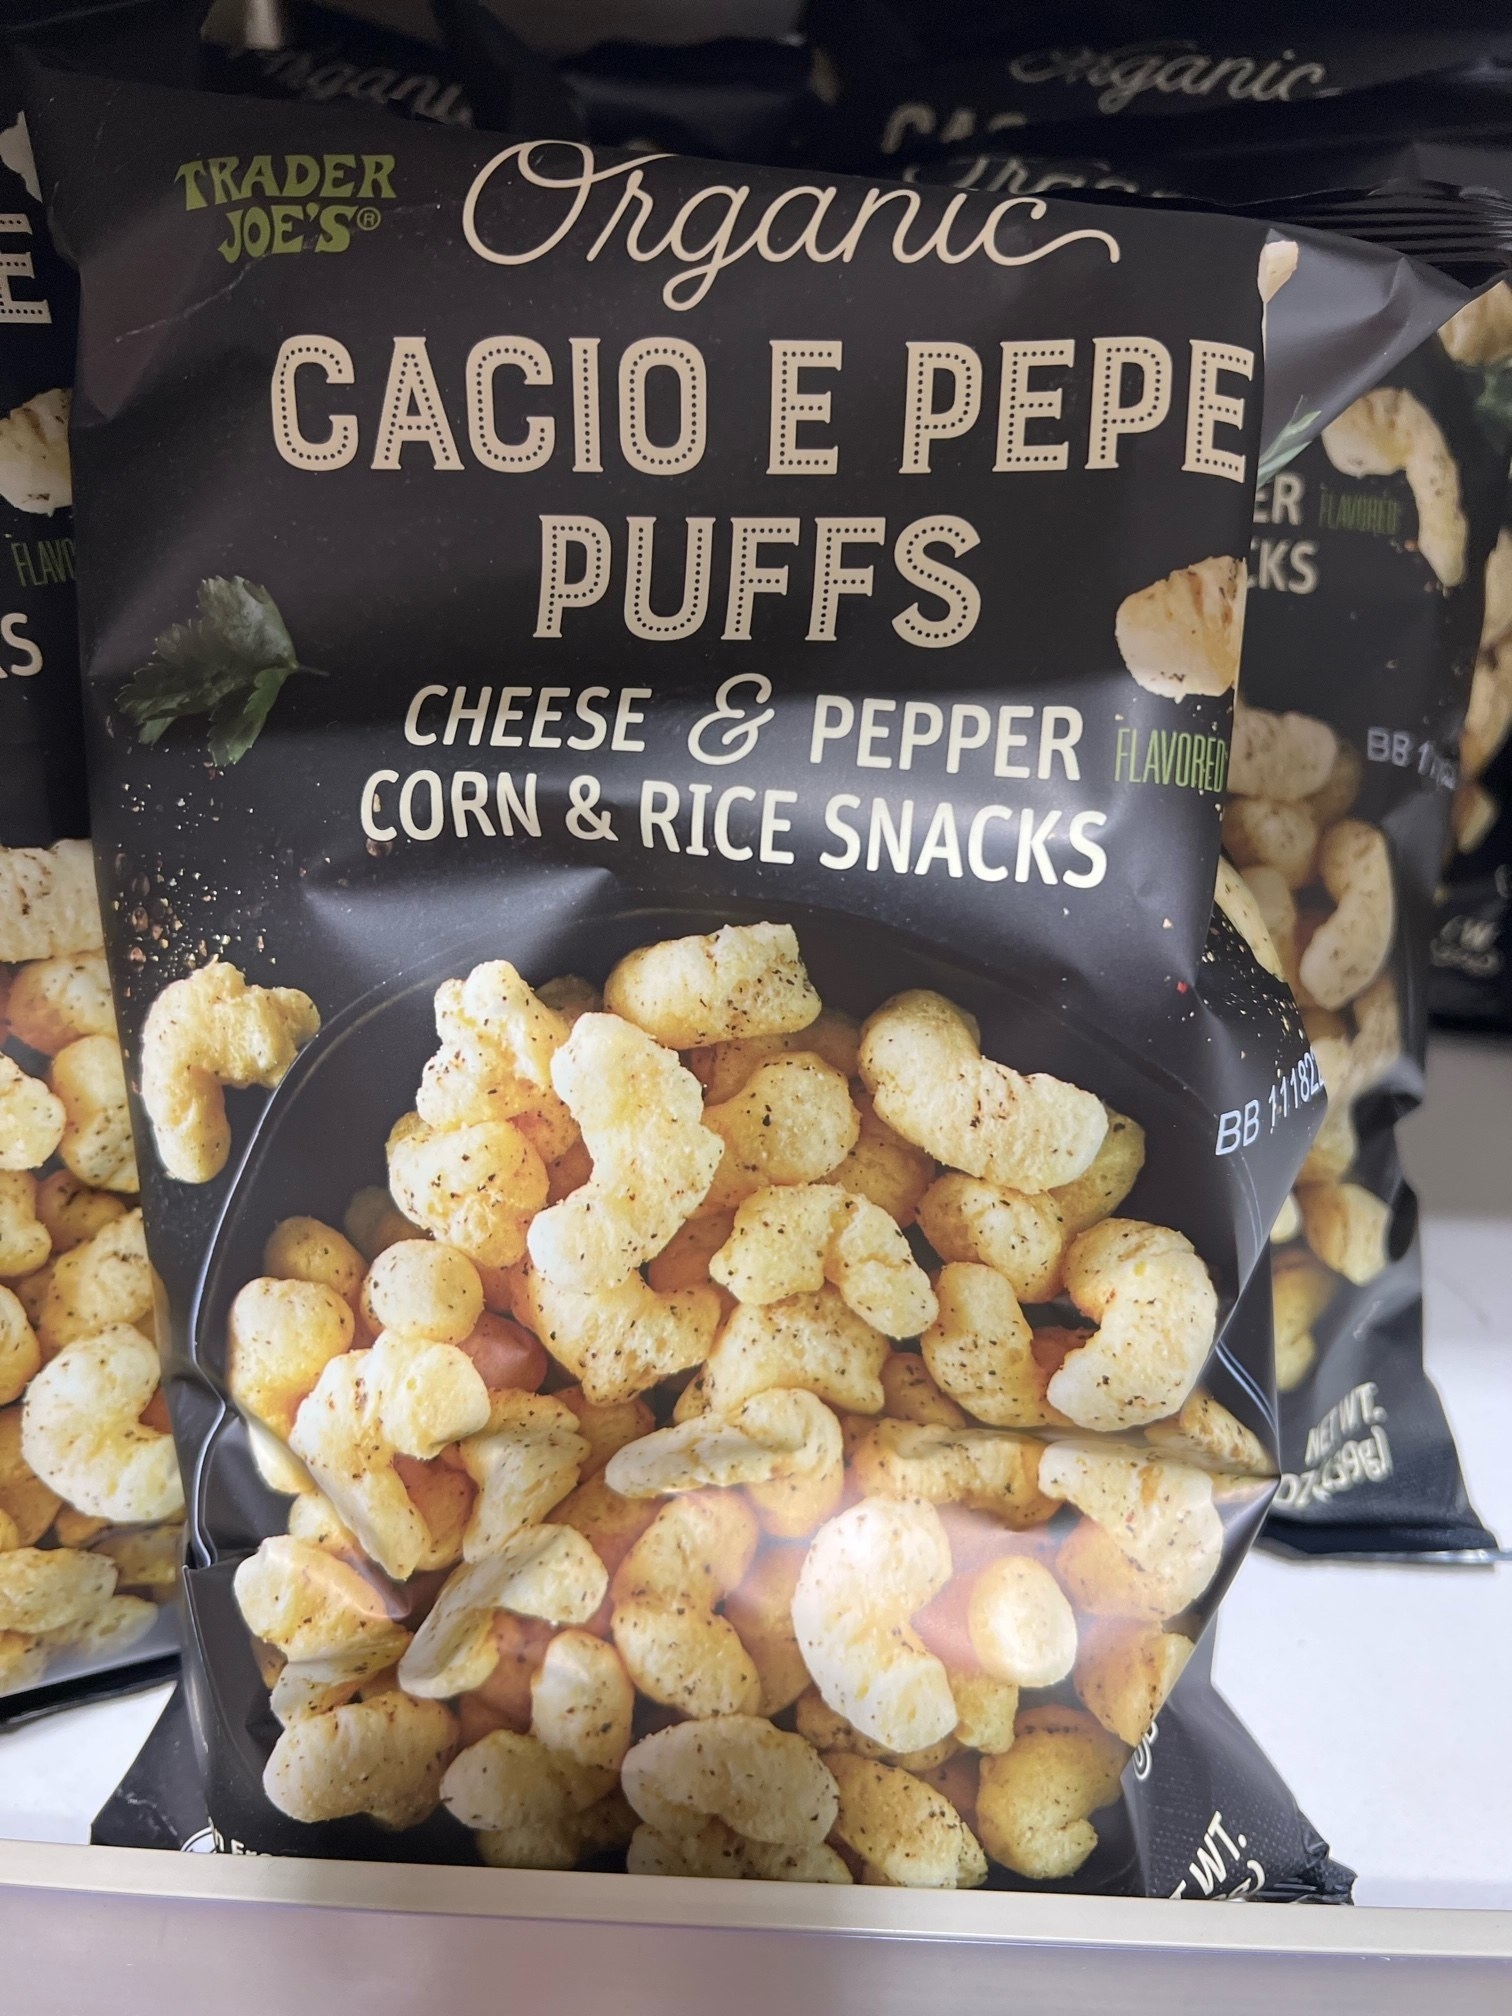 A bag of Cacio e Pepe Puffs.